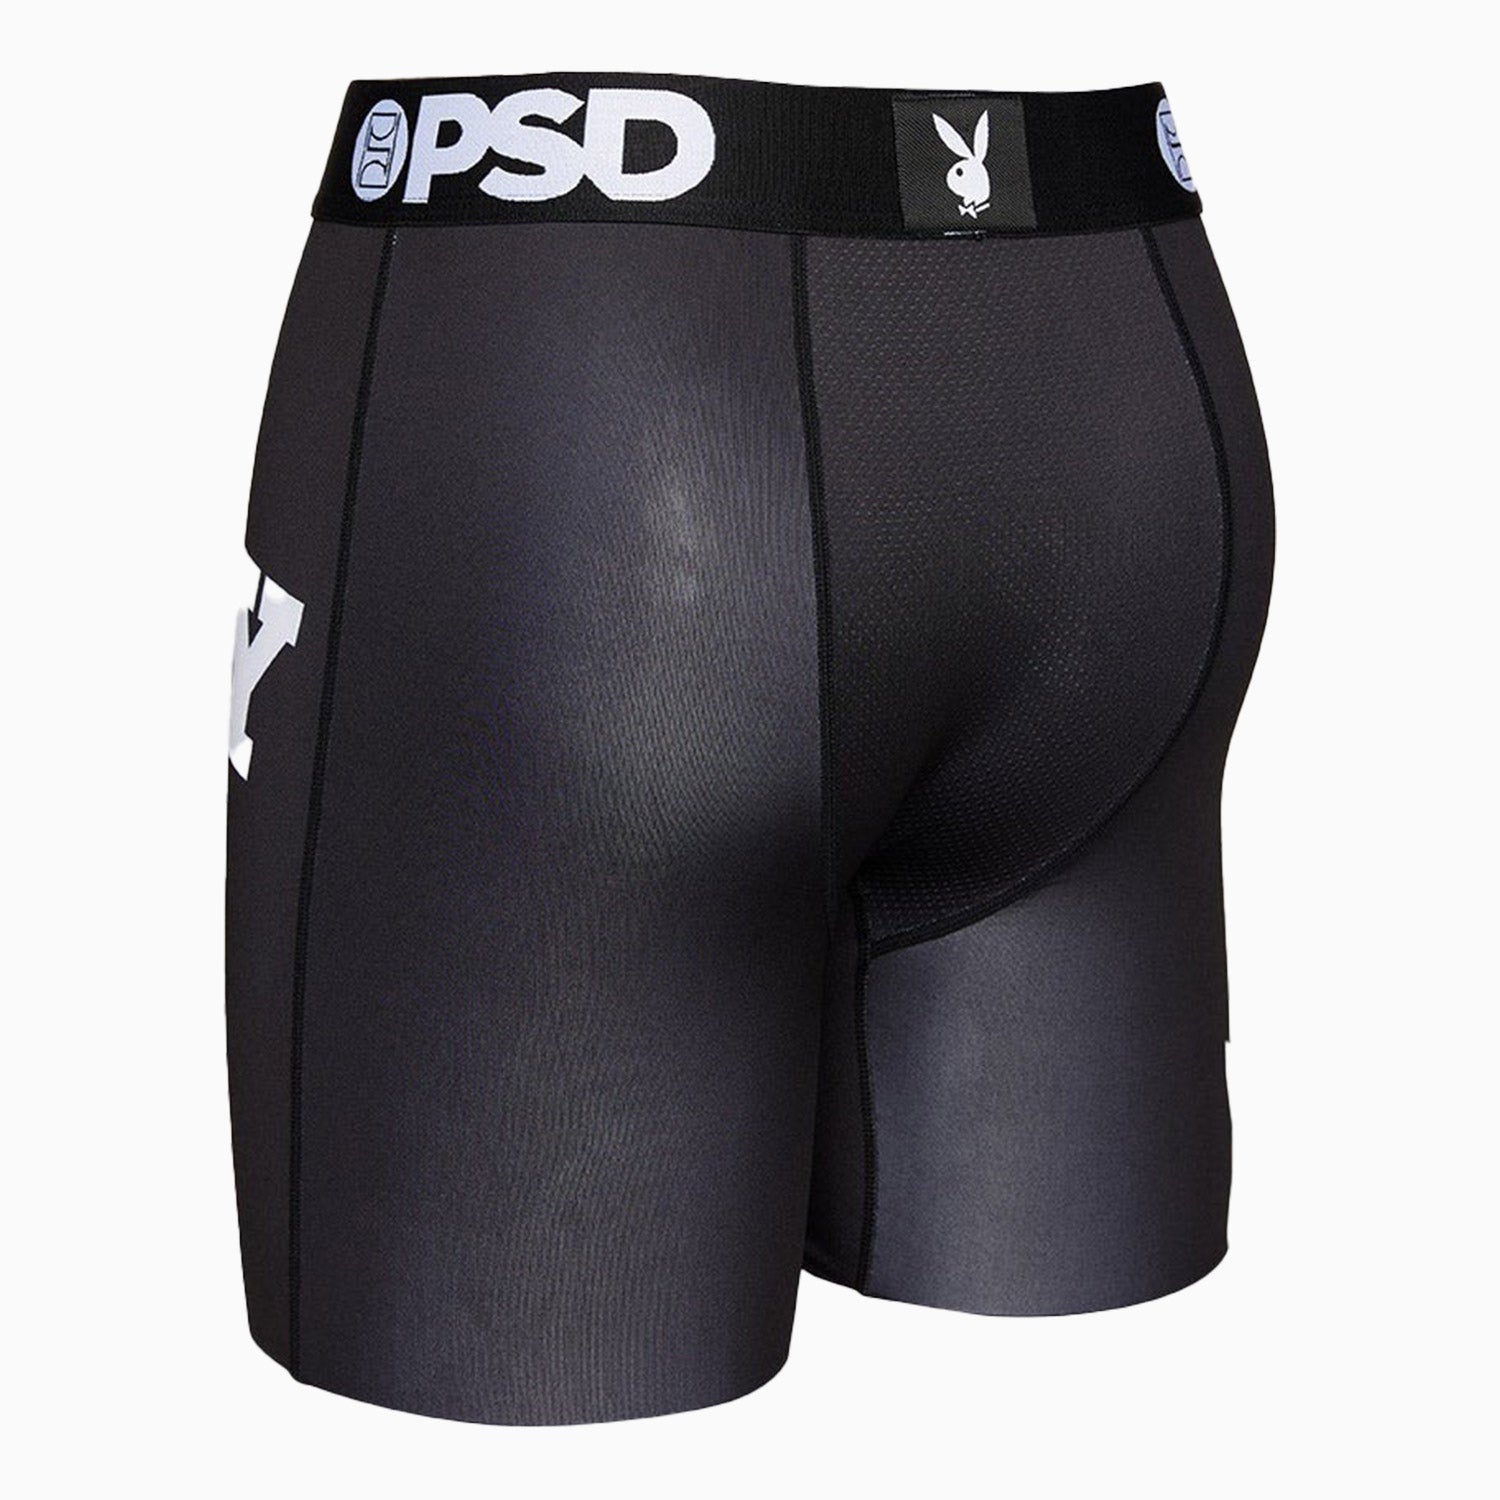 psd-underwear-mens-playboy-logo-boxers-122180046